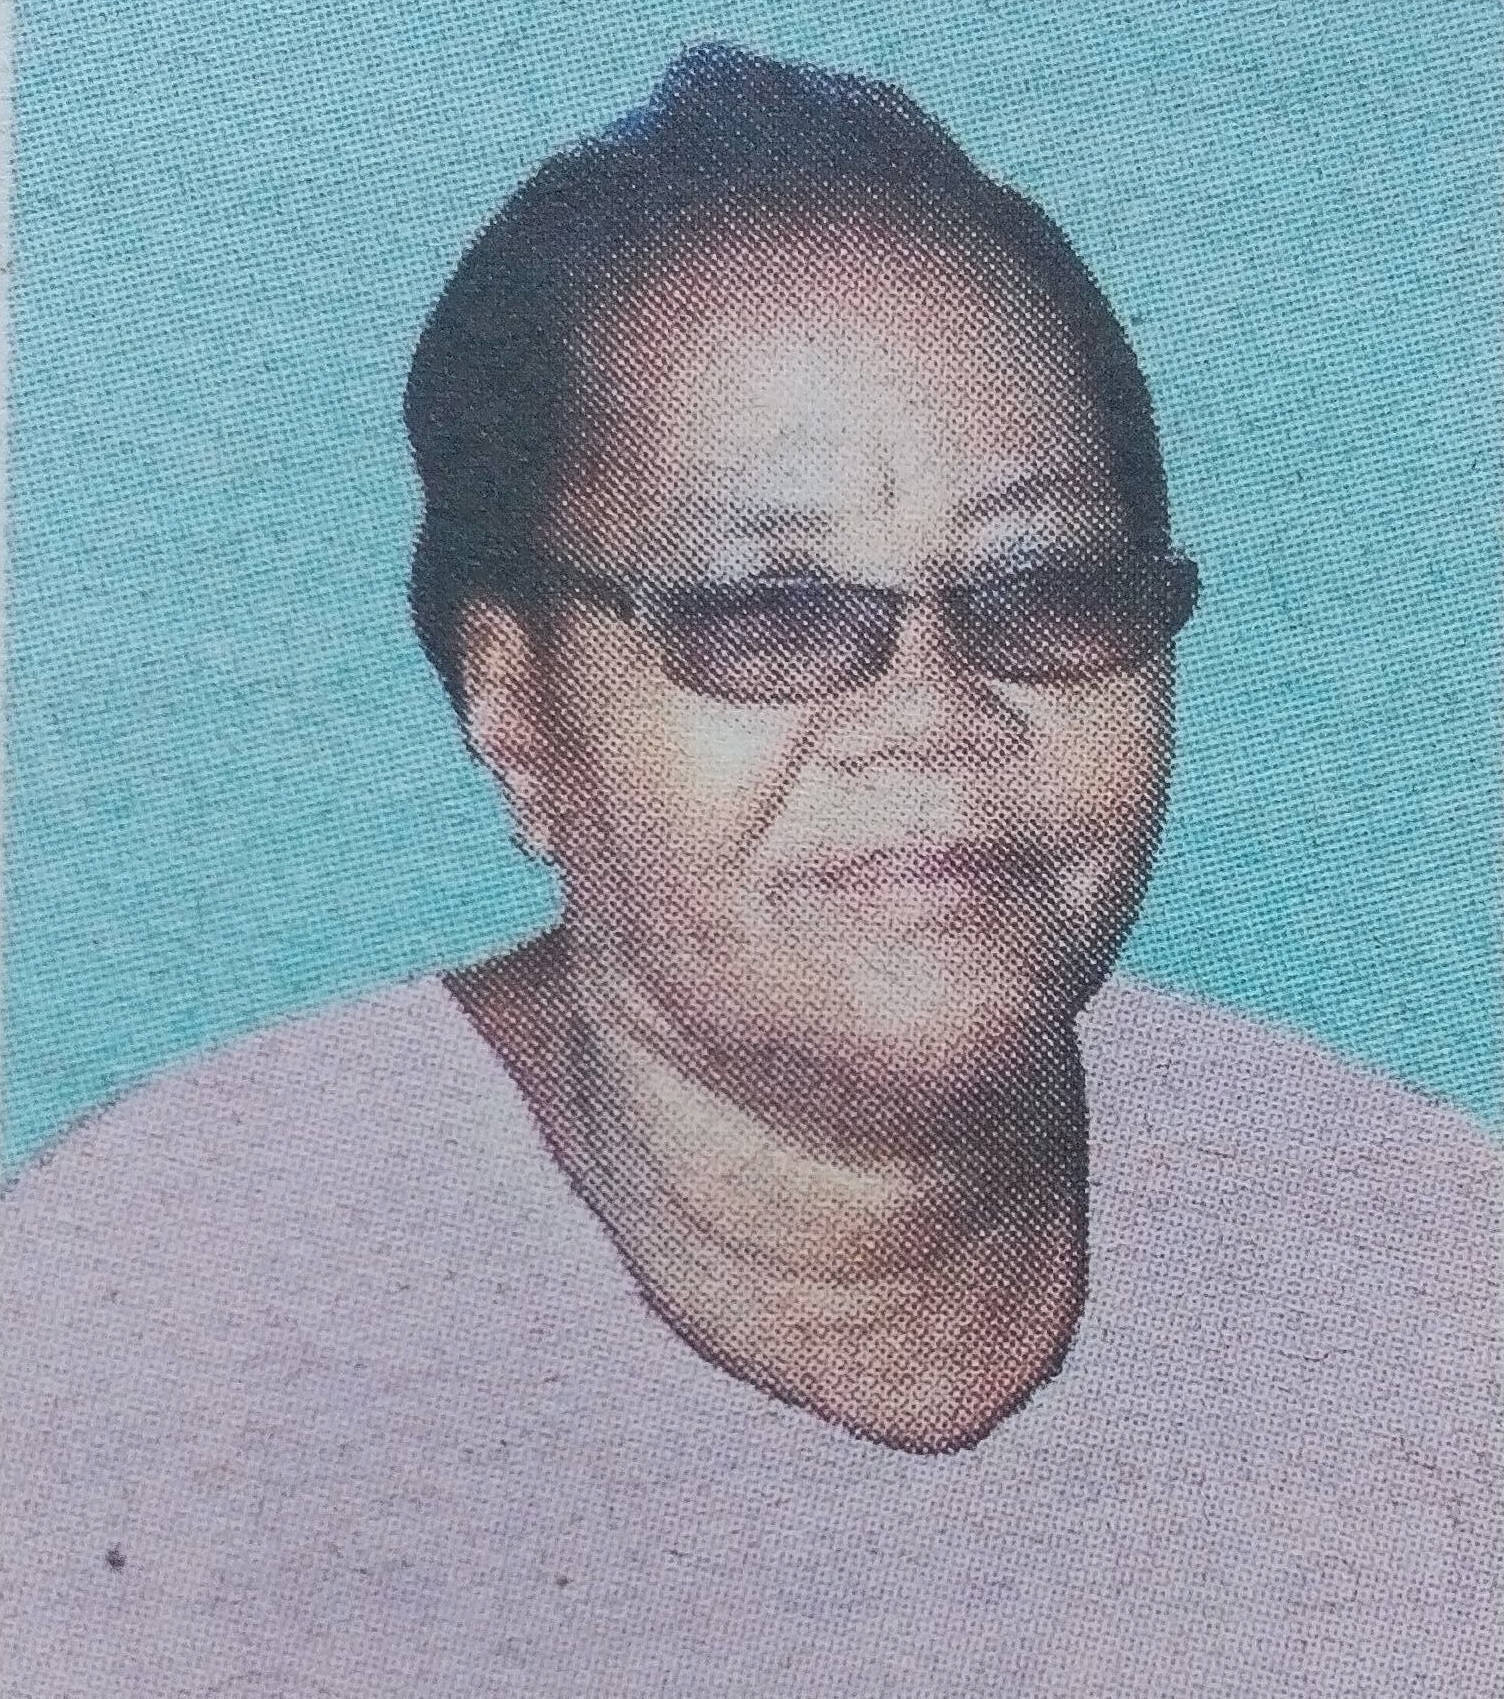 Obituary Image of Helen Mrunde Kighowa sunrise:23rd April 1958- sunset:27th March2017